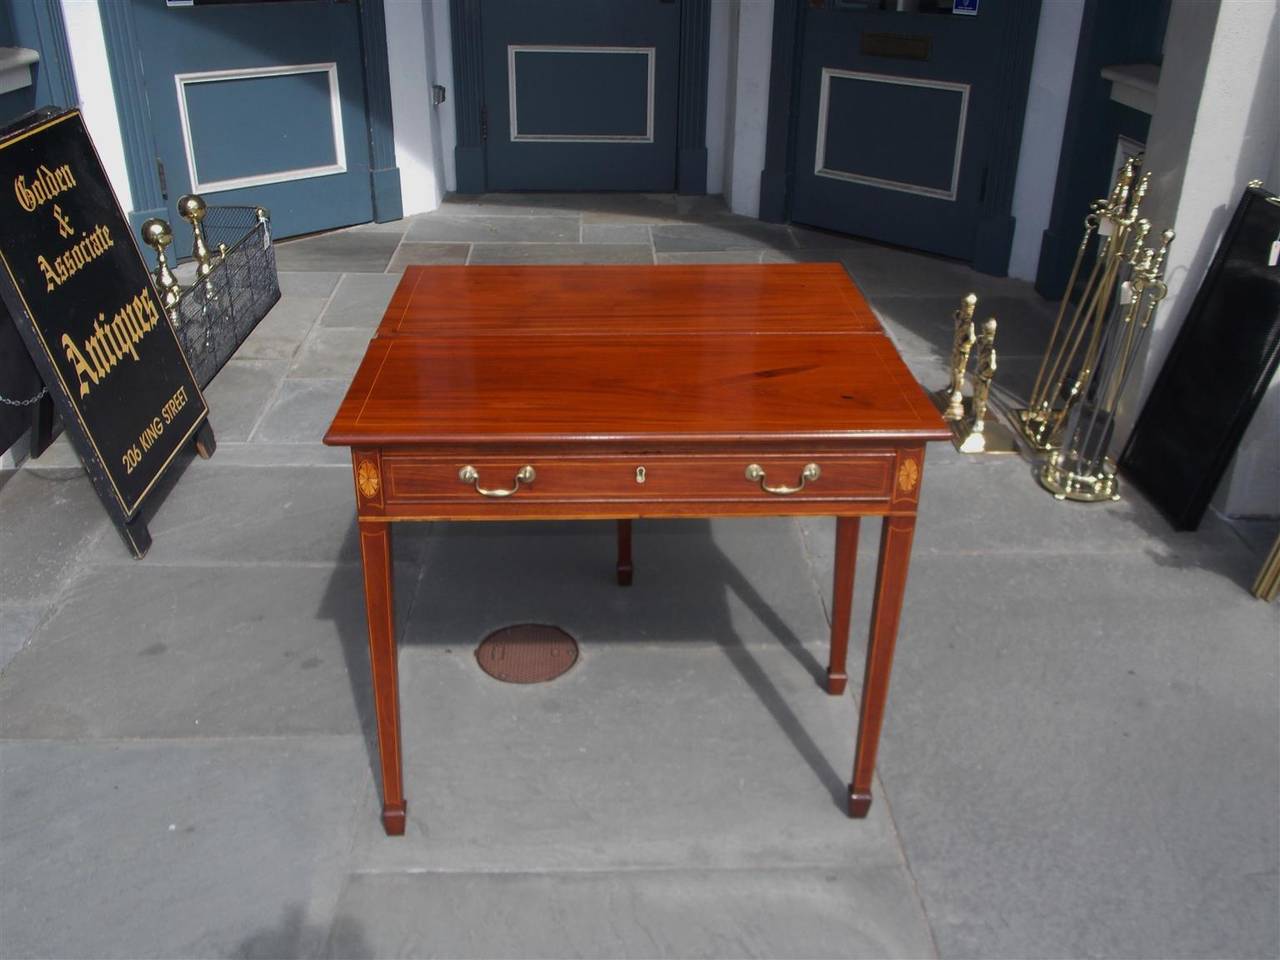 Early 19th Century American Mahogany Patera Inlaid Game Table, Circa 1800